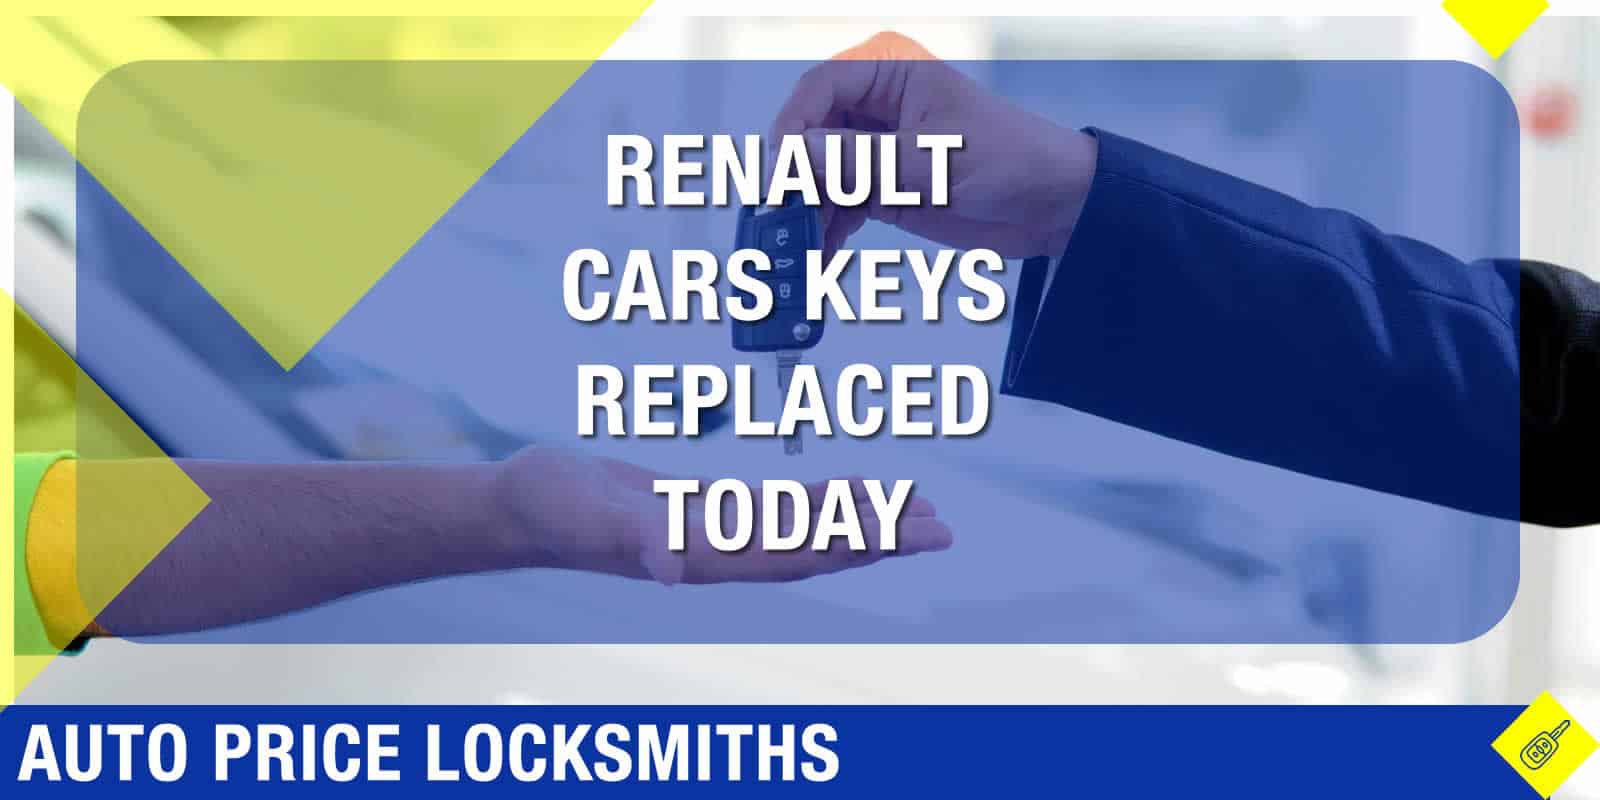 Renault replacement car leys Shropshire